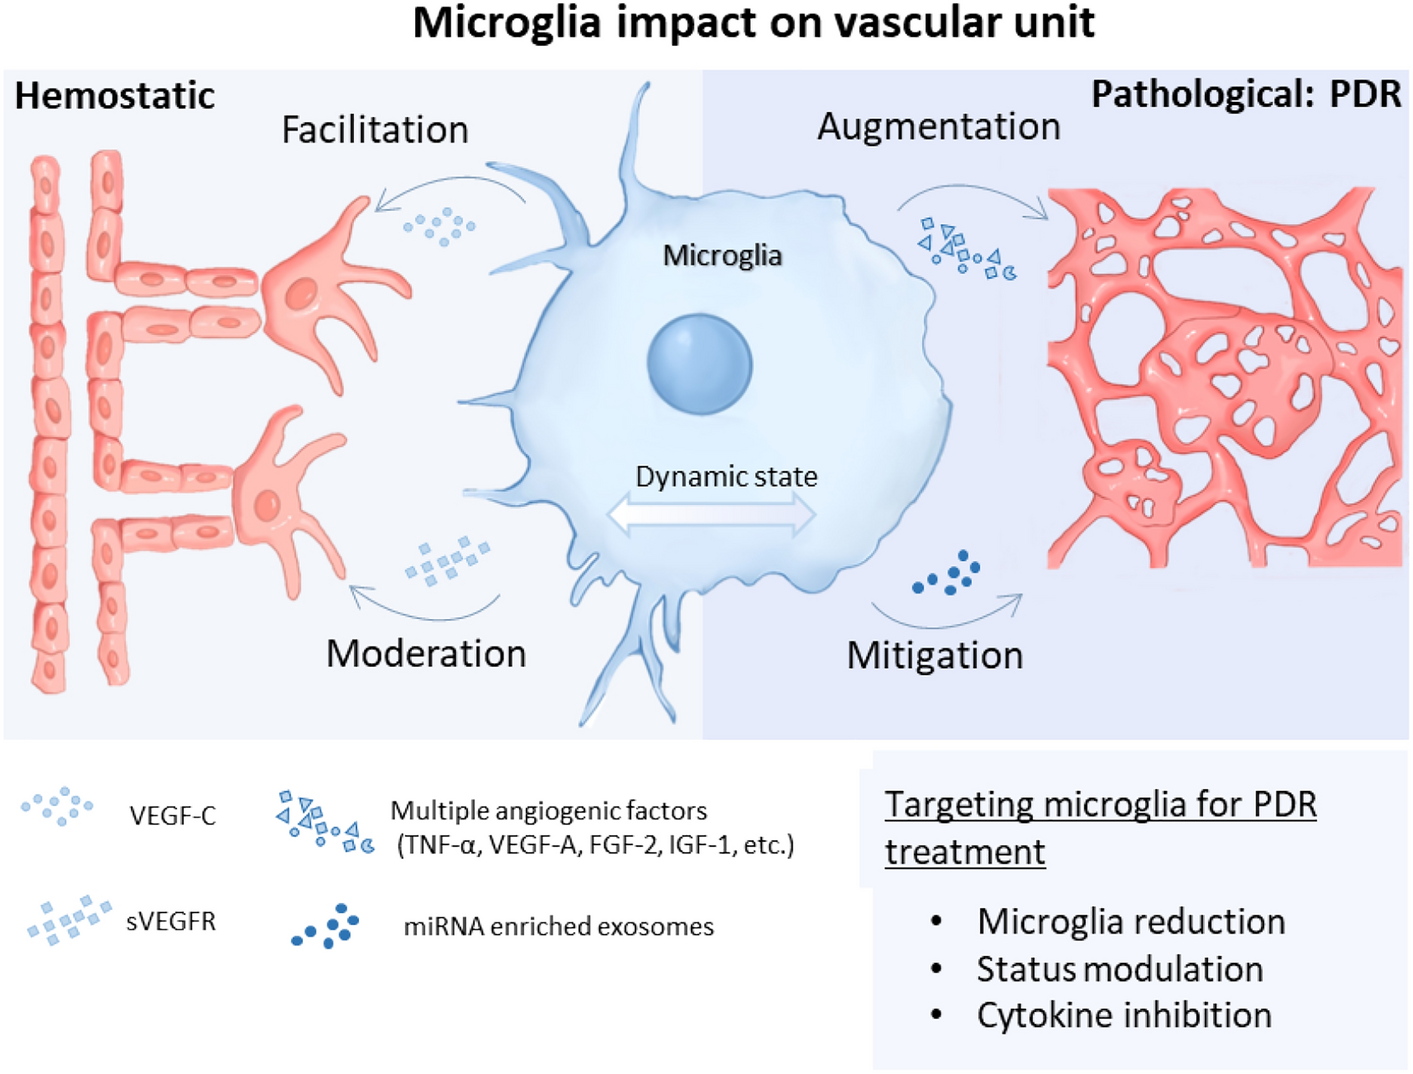 Microglia in retinal angiogenesis and diabetic retinopathy